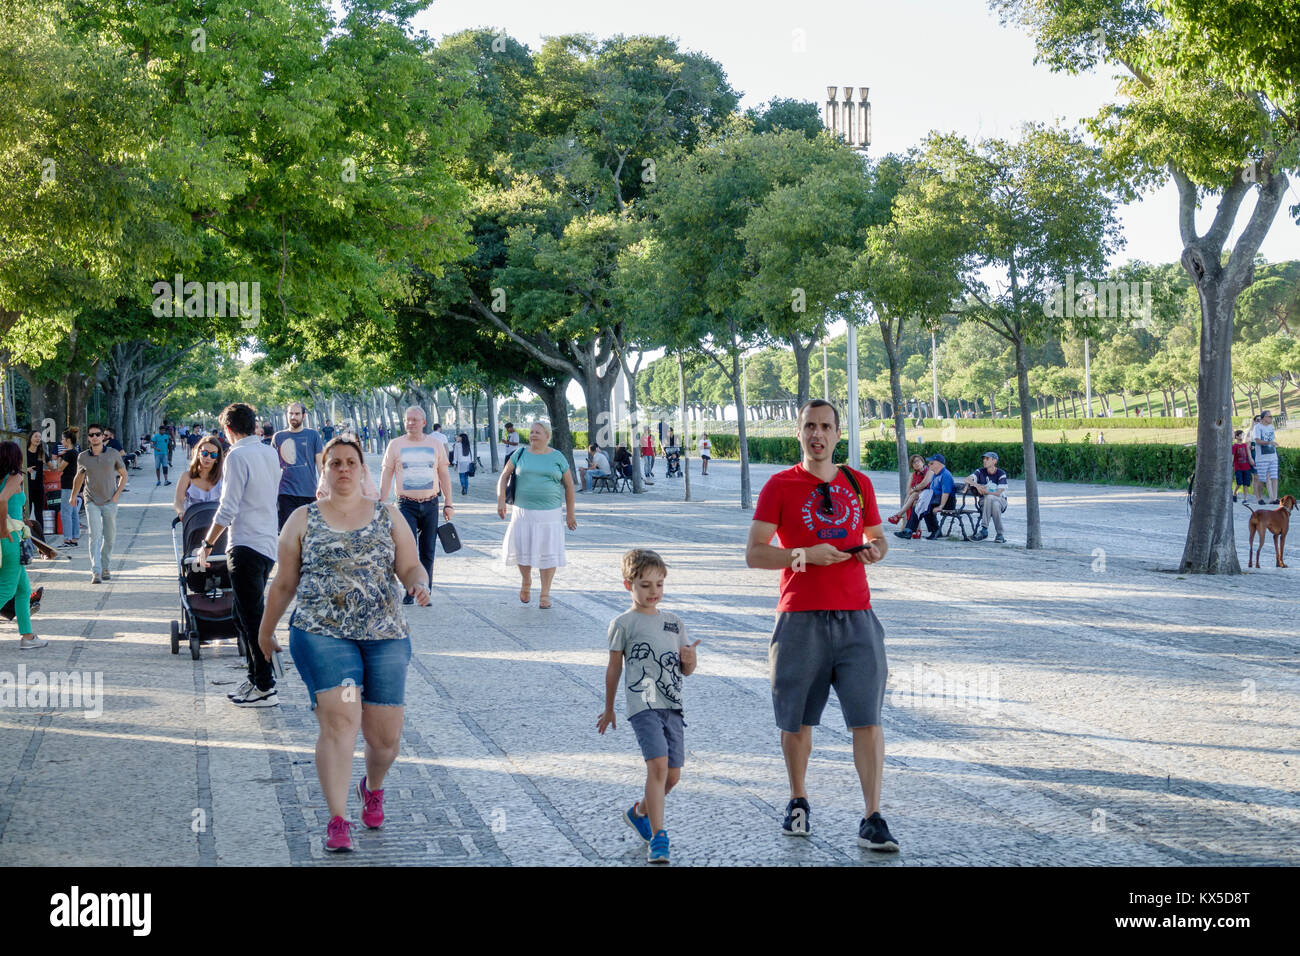 Lisbona Portogallo,Praca do Marques de Pombal,Parco Eduardo VII,Parque,parco pubblico,passeggiata,uomo uomo maschio,donna femmina donne,ragazzi,bambini bambini bambino Foto Stock